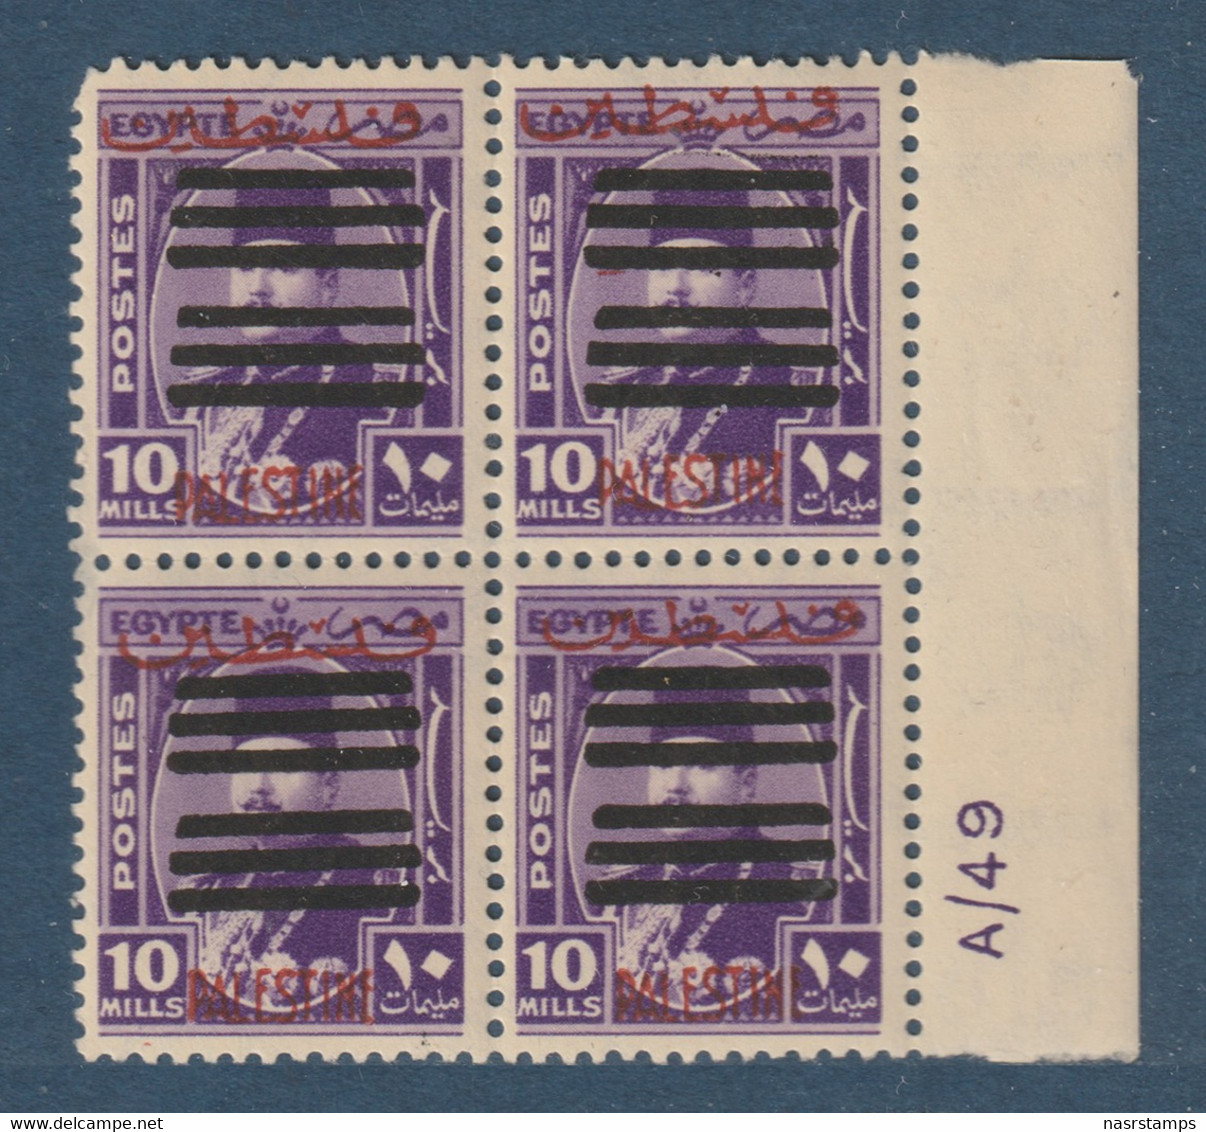 Egypt - Palestine - 1953 - Rare - Overprinted 6 Bars - ( 10m - K. Farouk ) - MNH - Unused Stamps